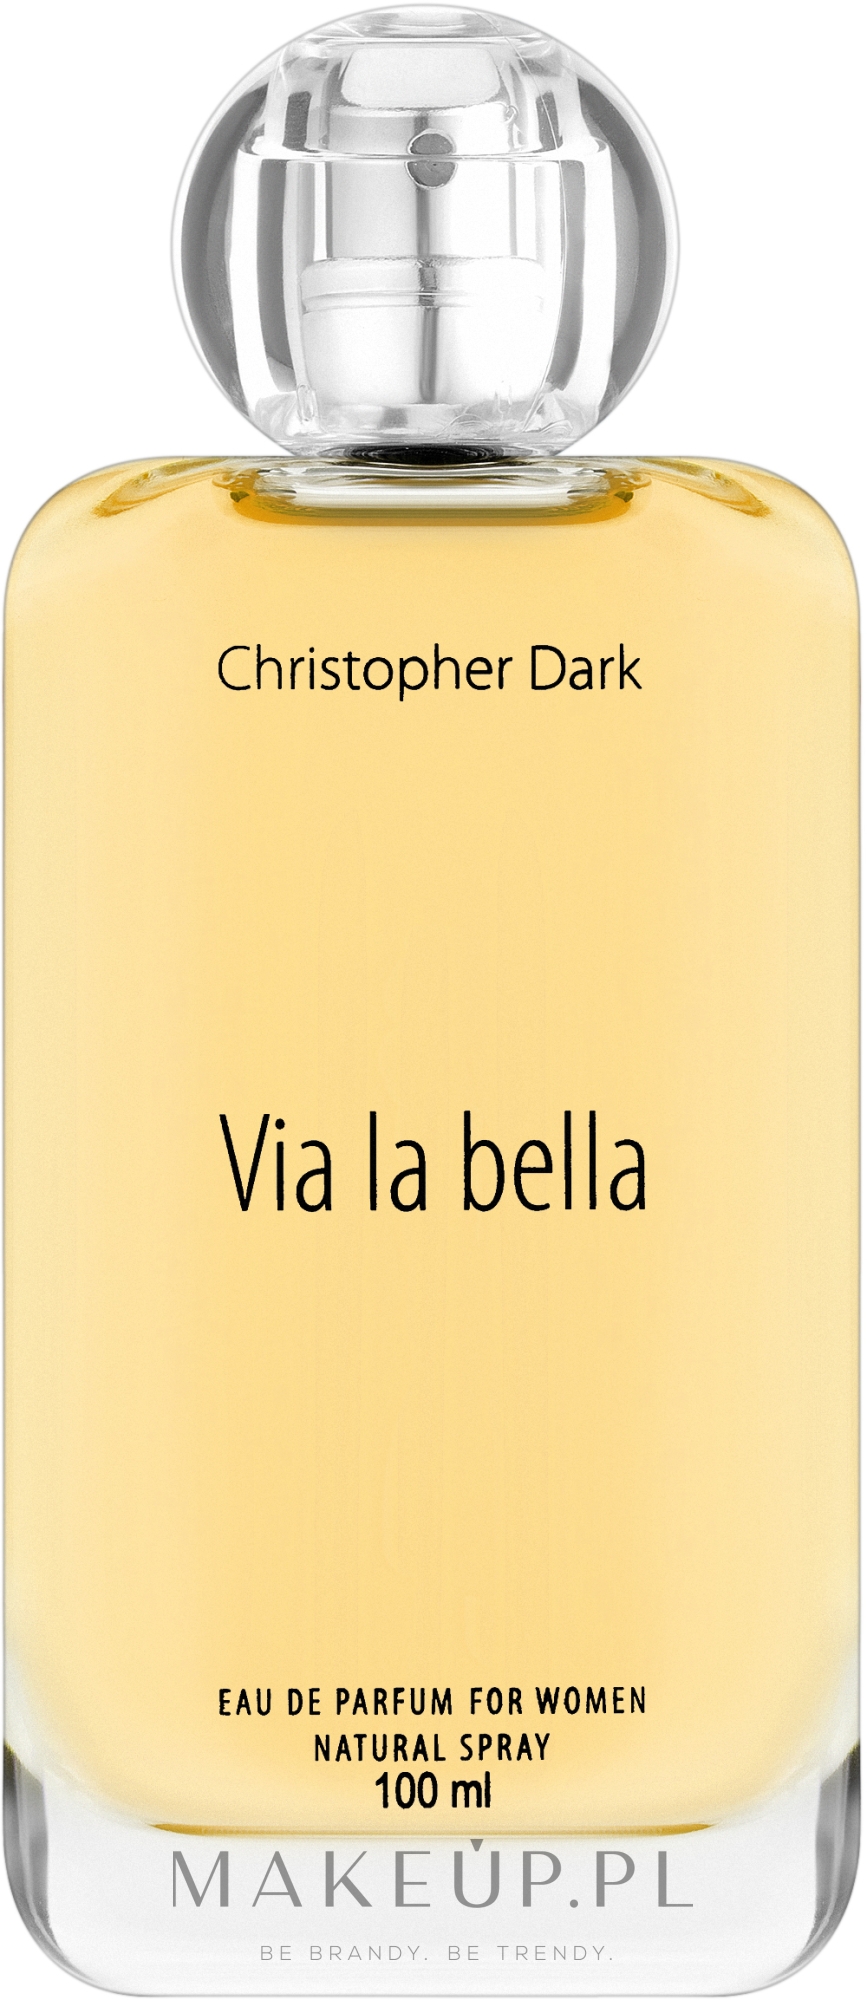 christopher dark via la bella